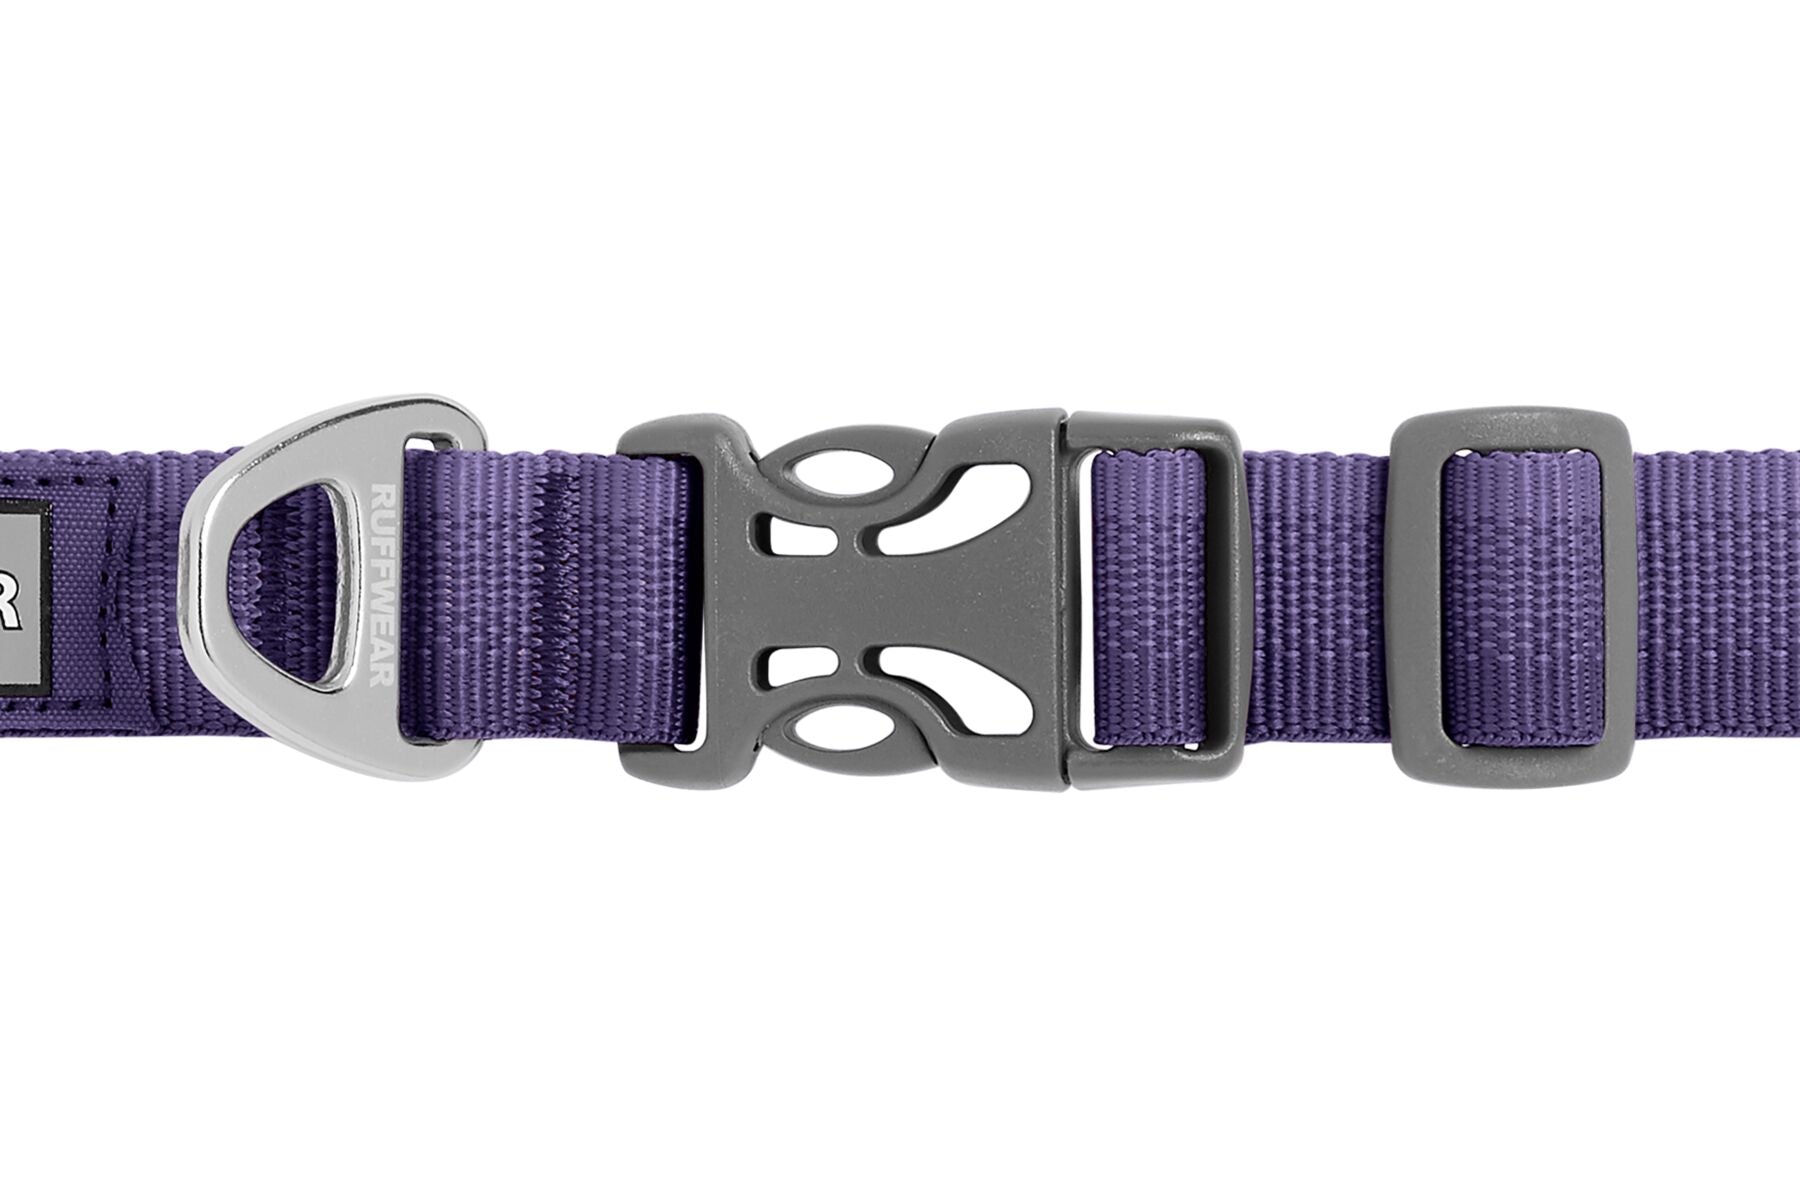 Collar para Perros Modelo Front Range Collar Purpura (Purple Sage) de Ruffwear